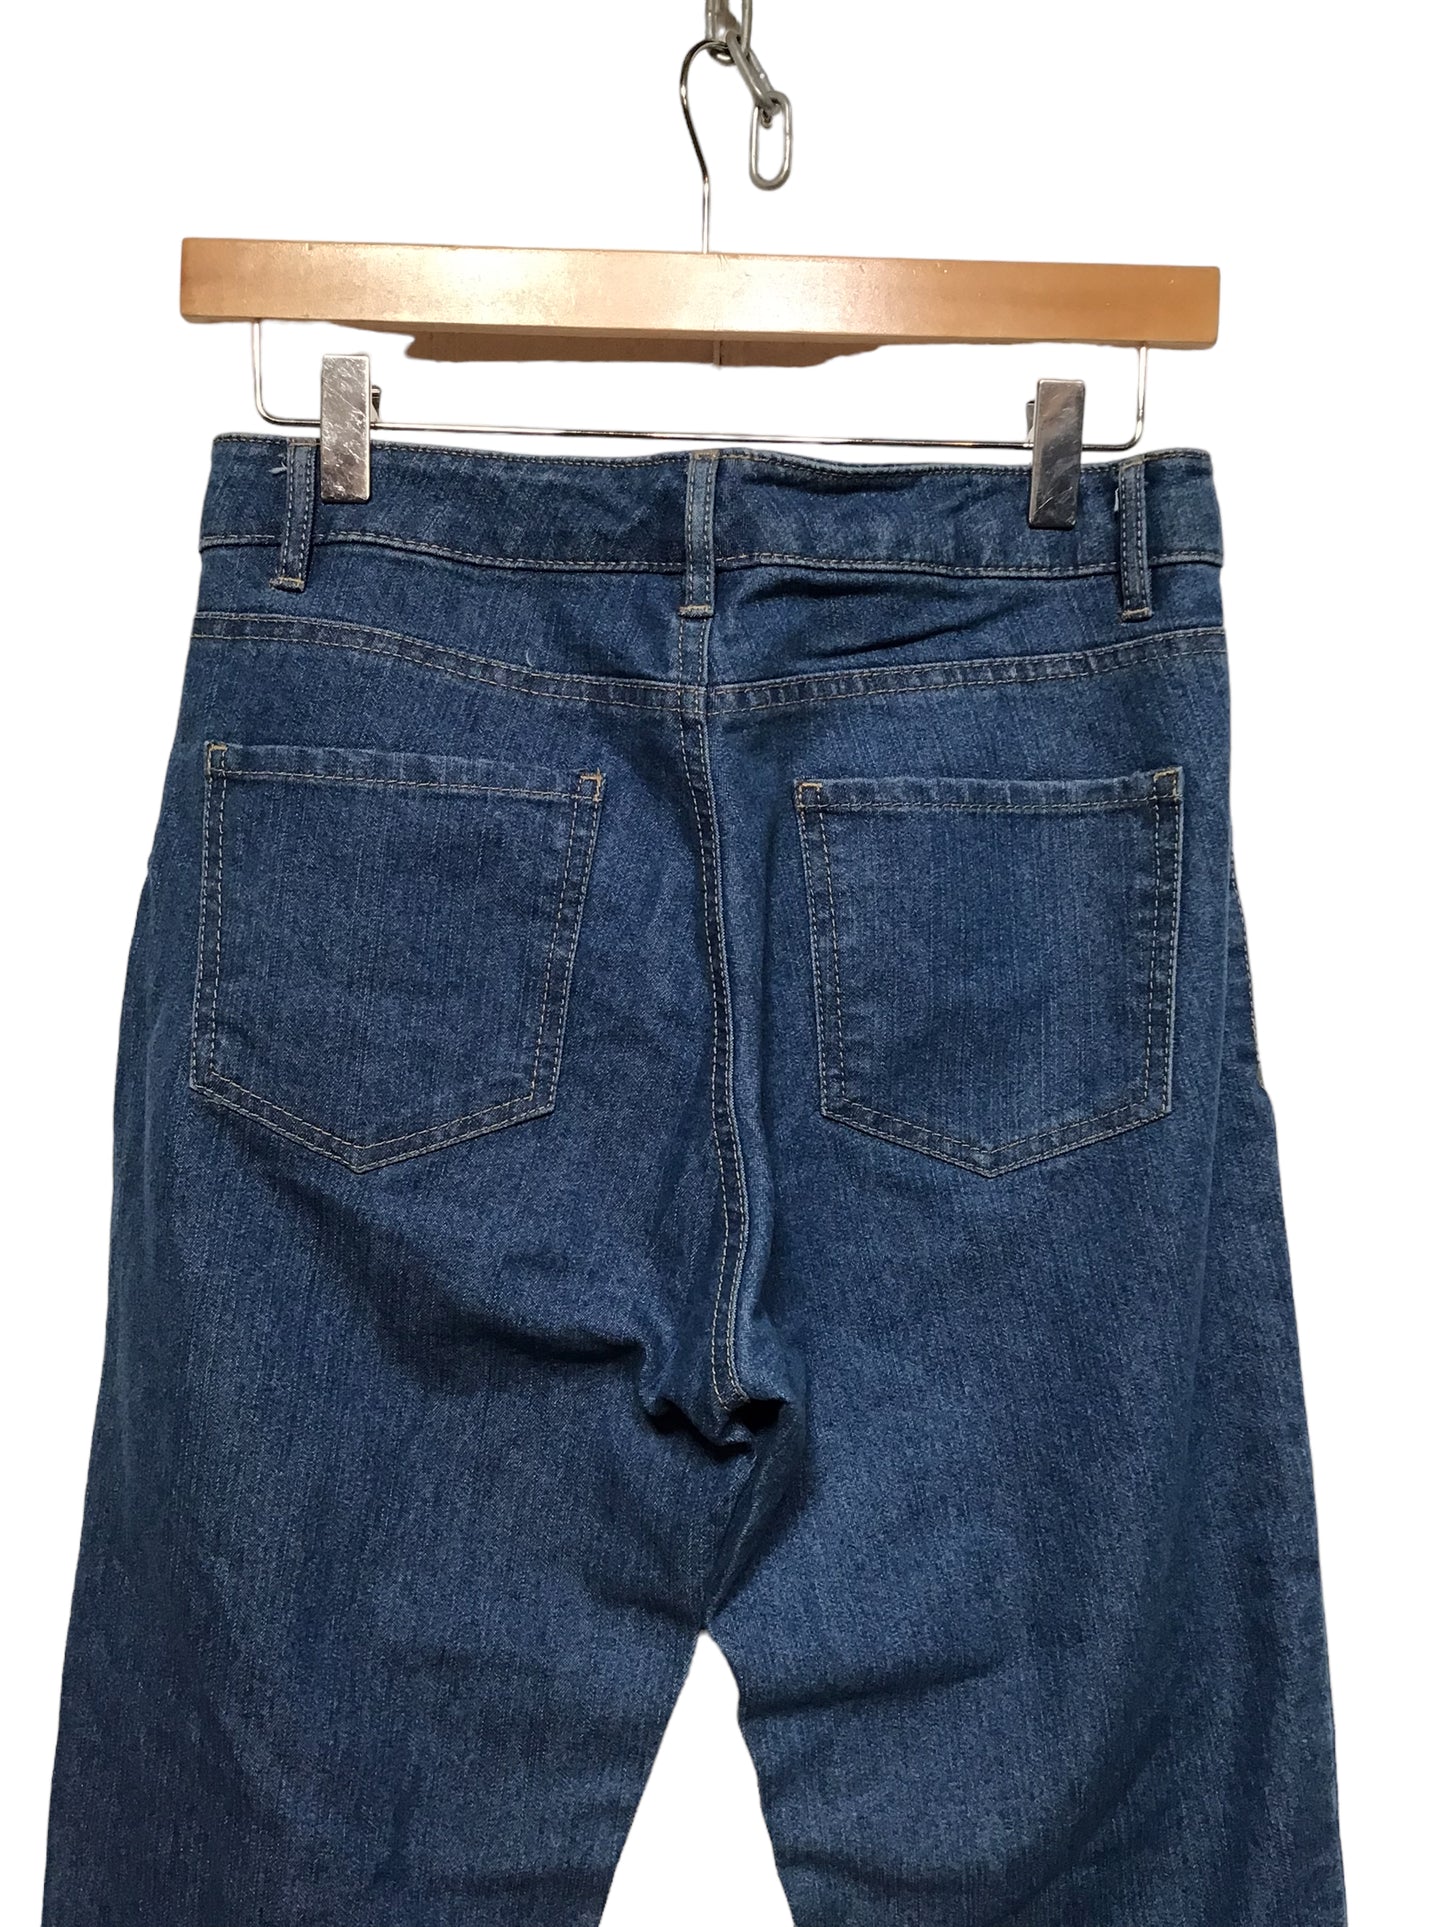 Blue Denim Jeans (30x30)